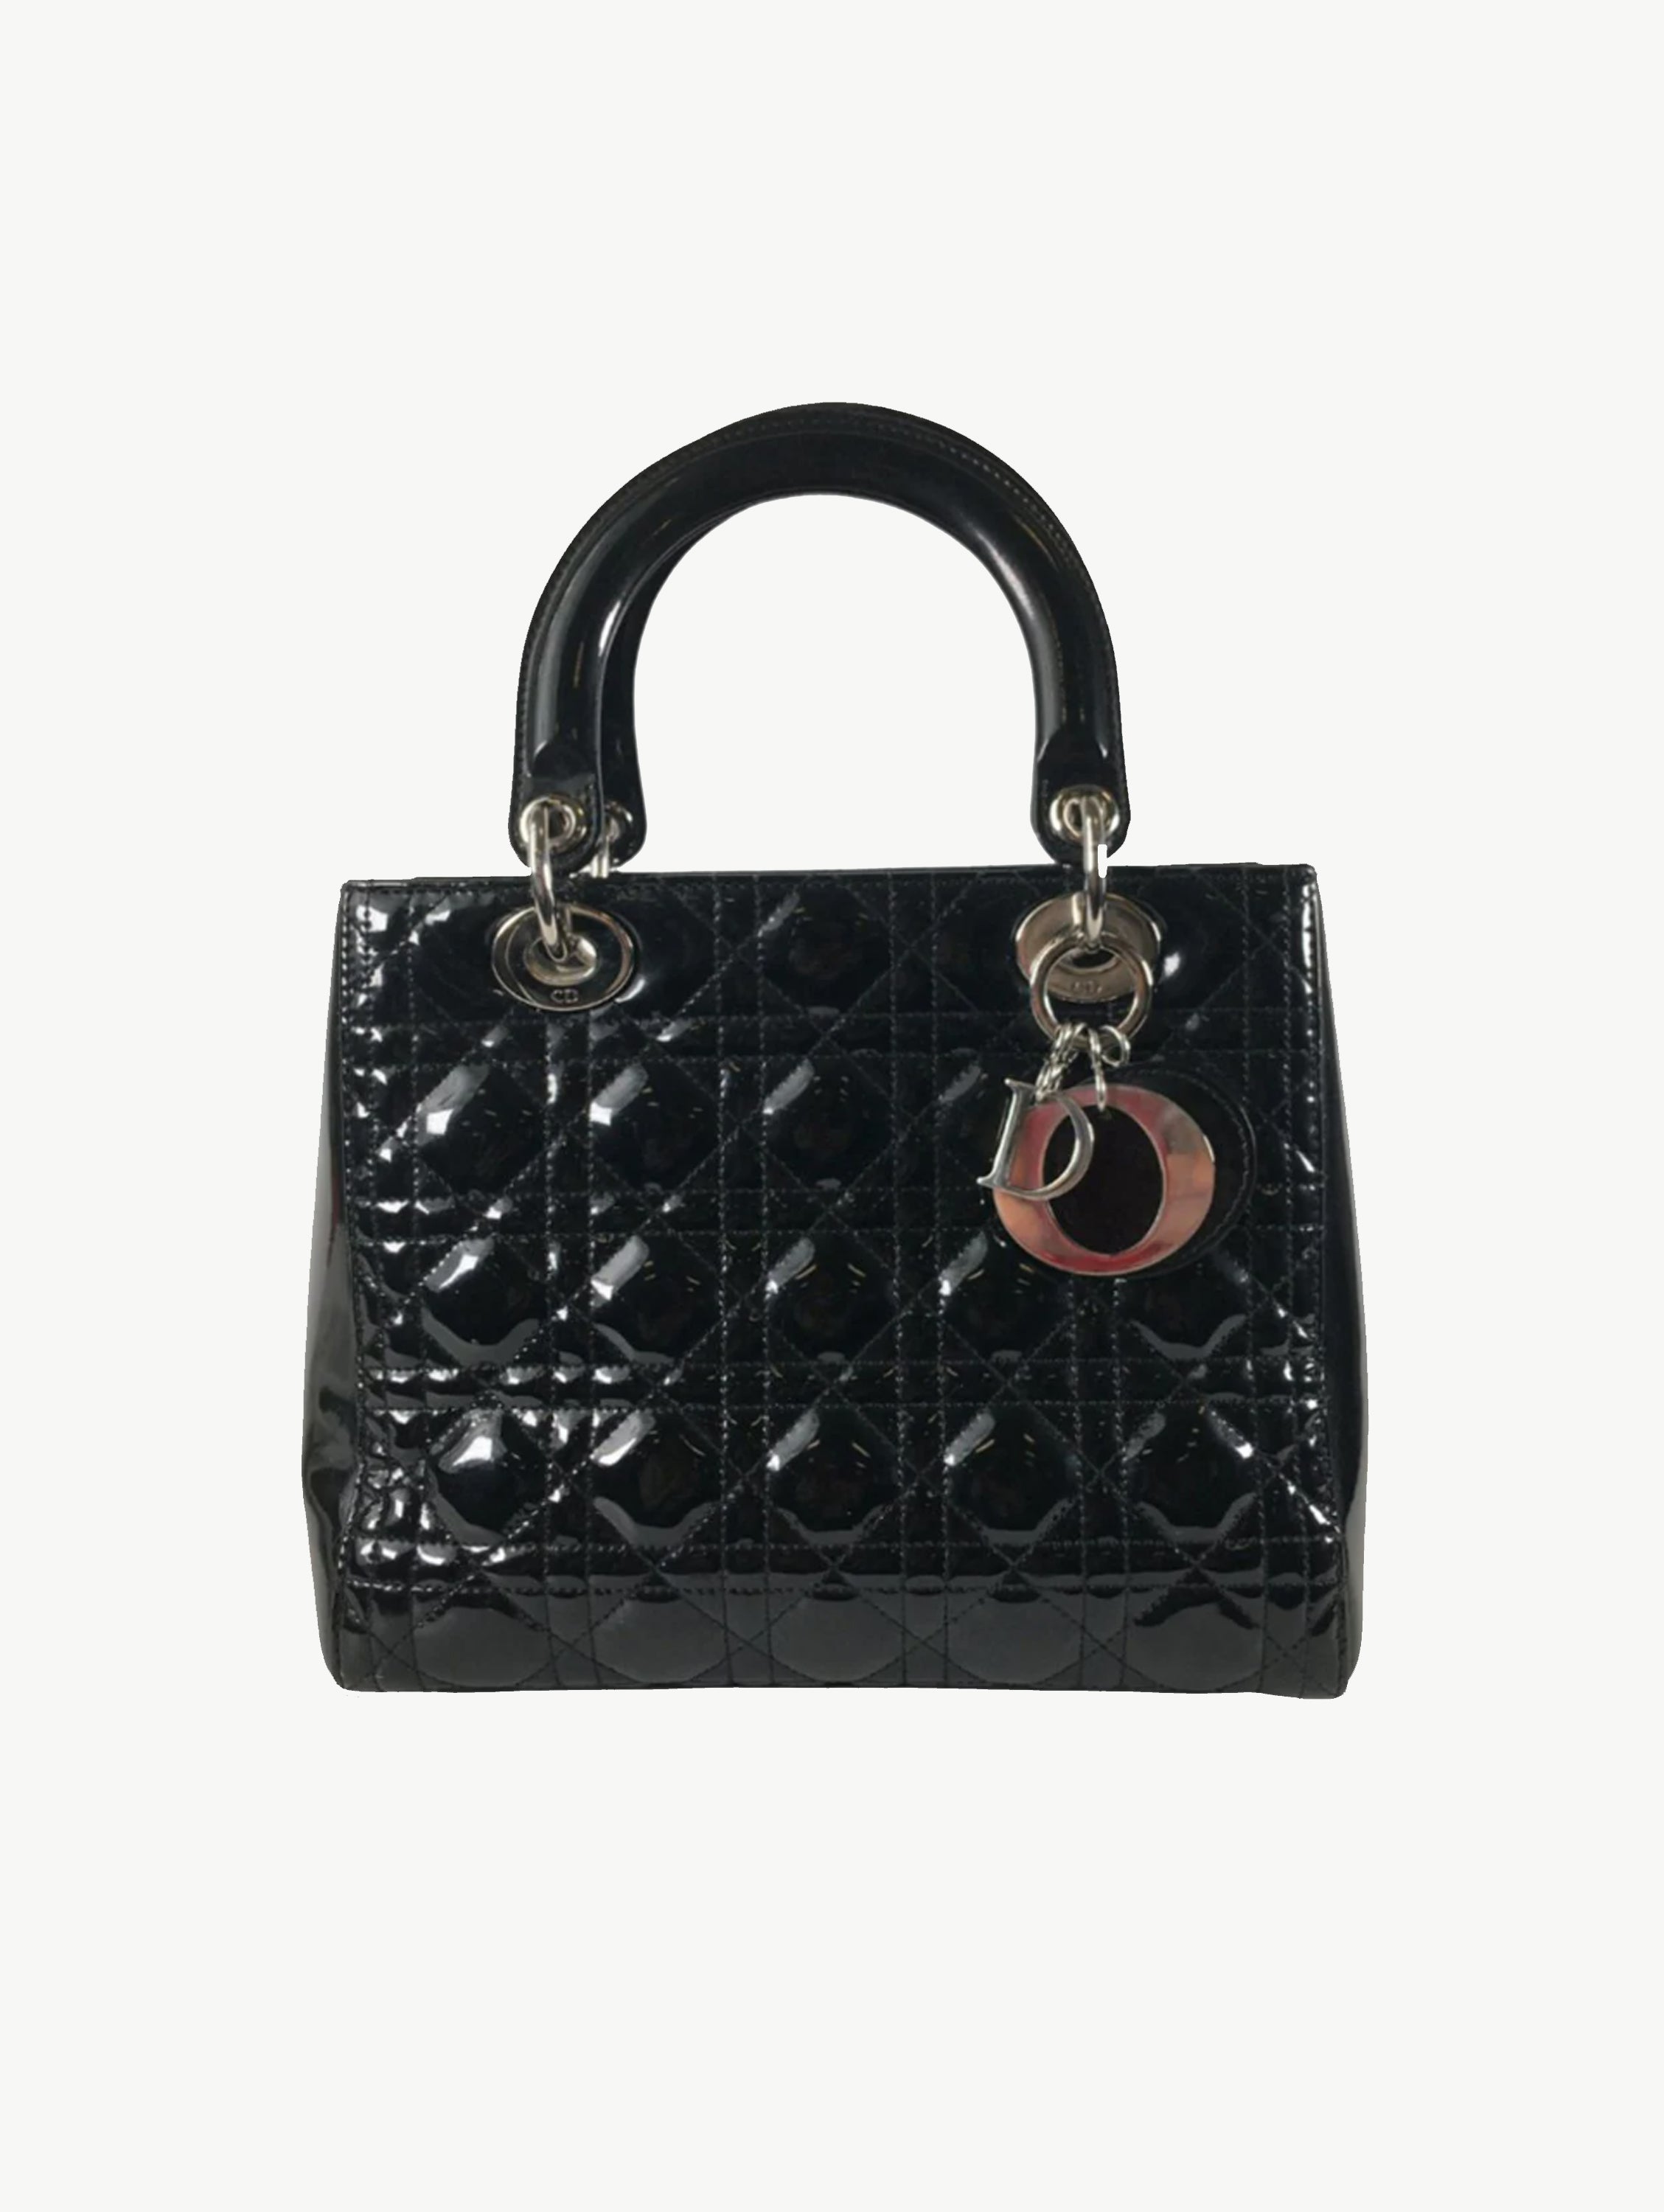 2010 Lady Dior patent bag